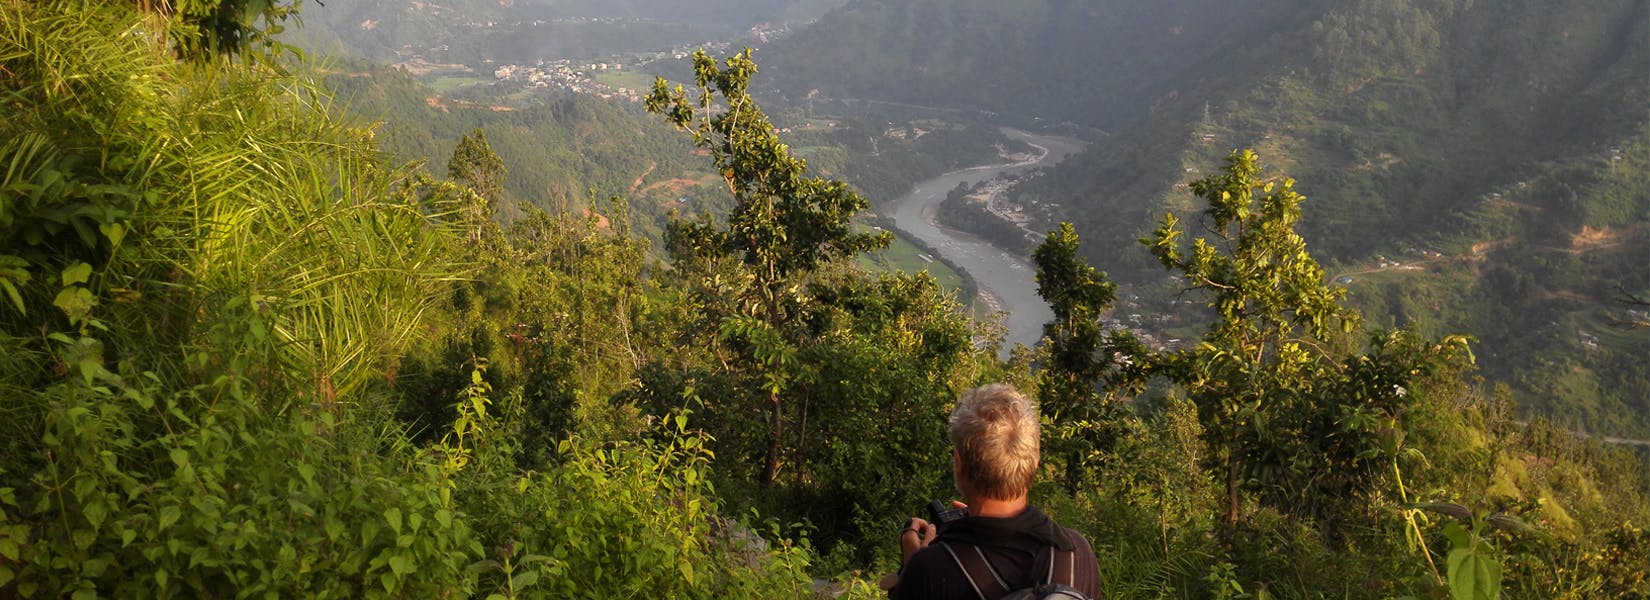 Camino Hiking in Nepal - <span class="font-light">4 days</span>